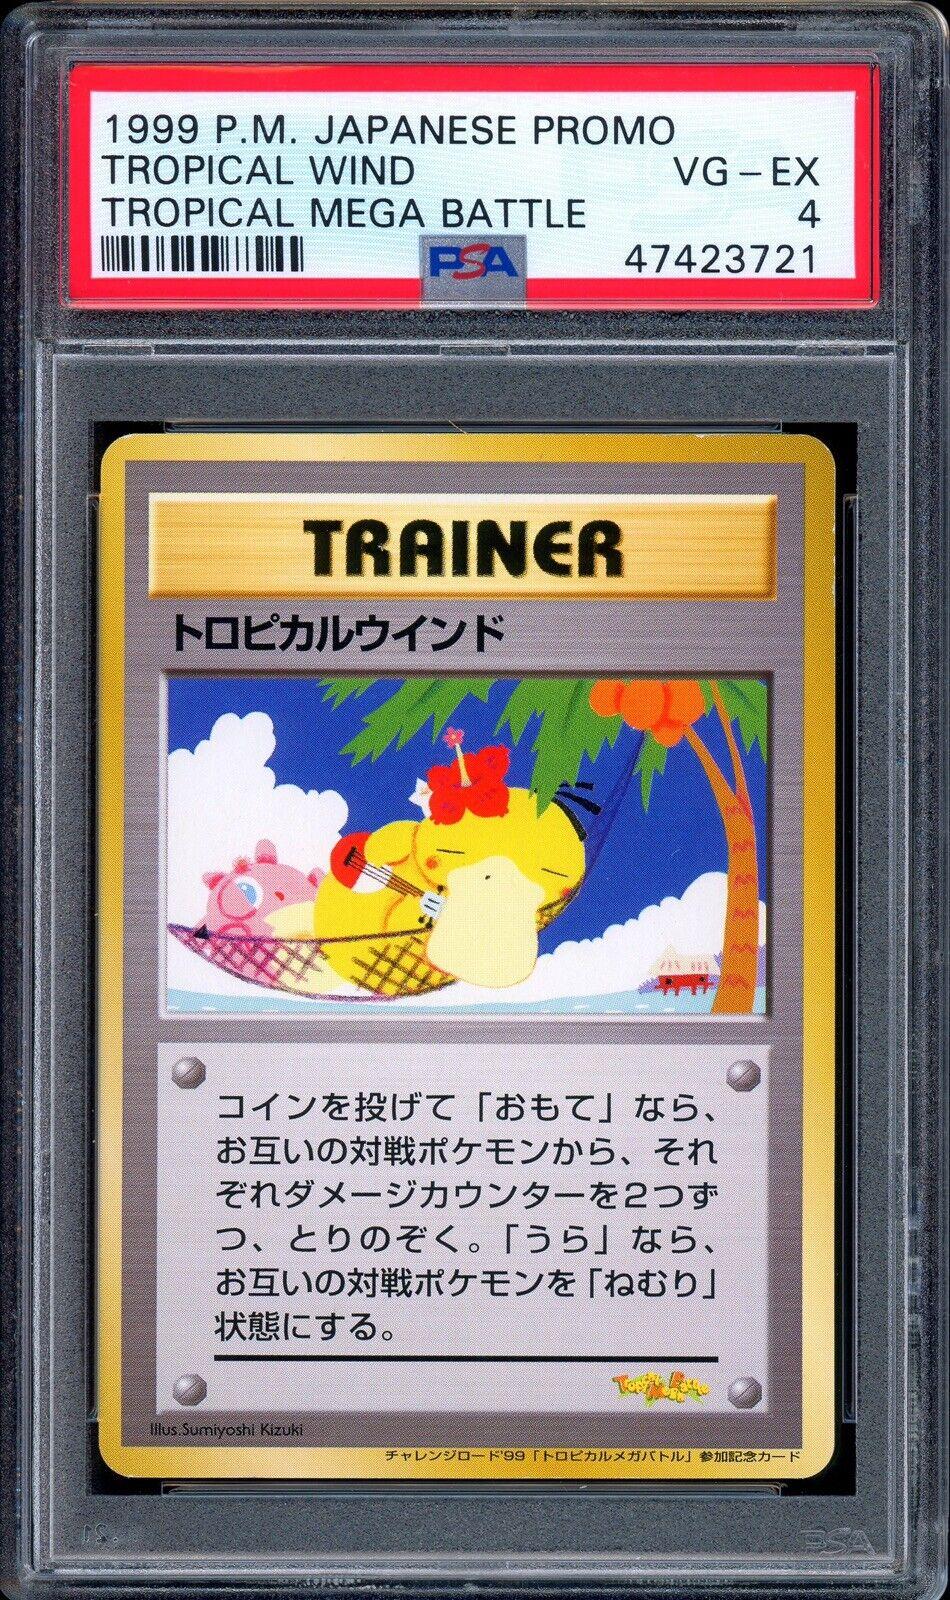 Tropical Mega Battle Pokémon Japanese Promo Tropical Wind: $65,100